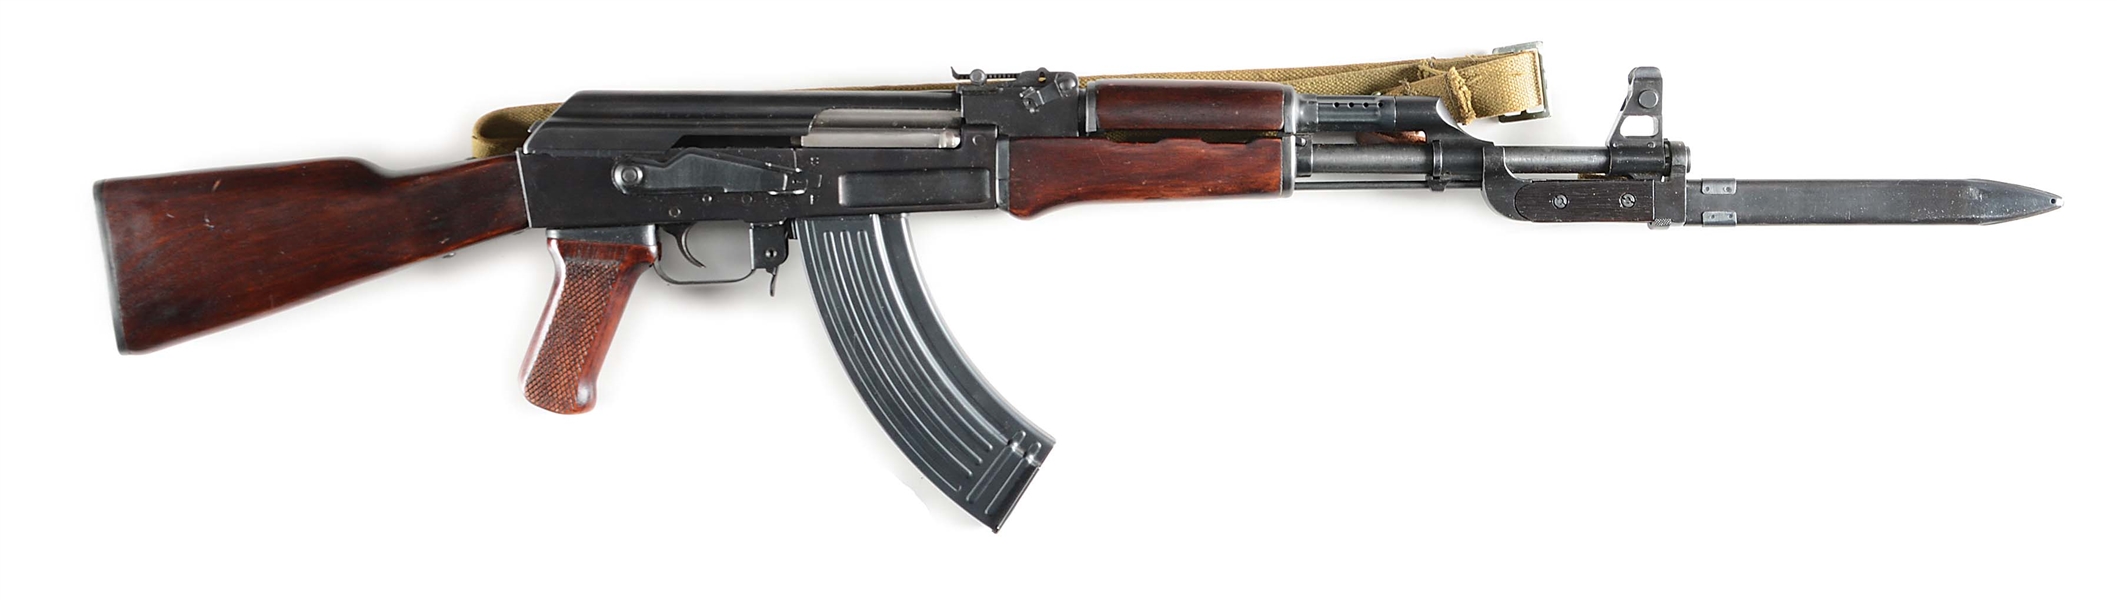 (M) PRE-BAN POLYTECH LEGEND SERIES AK-47S WITH ACCESSORIES.